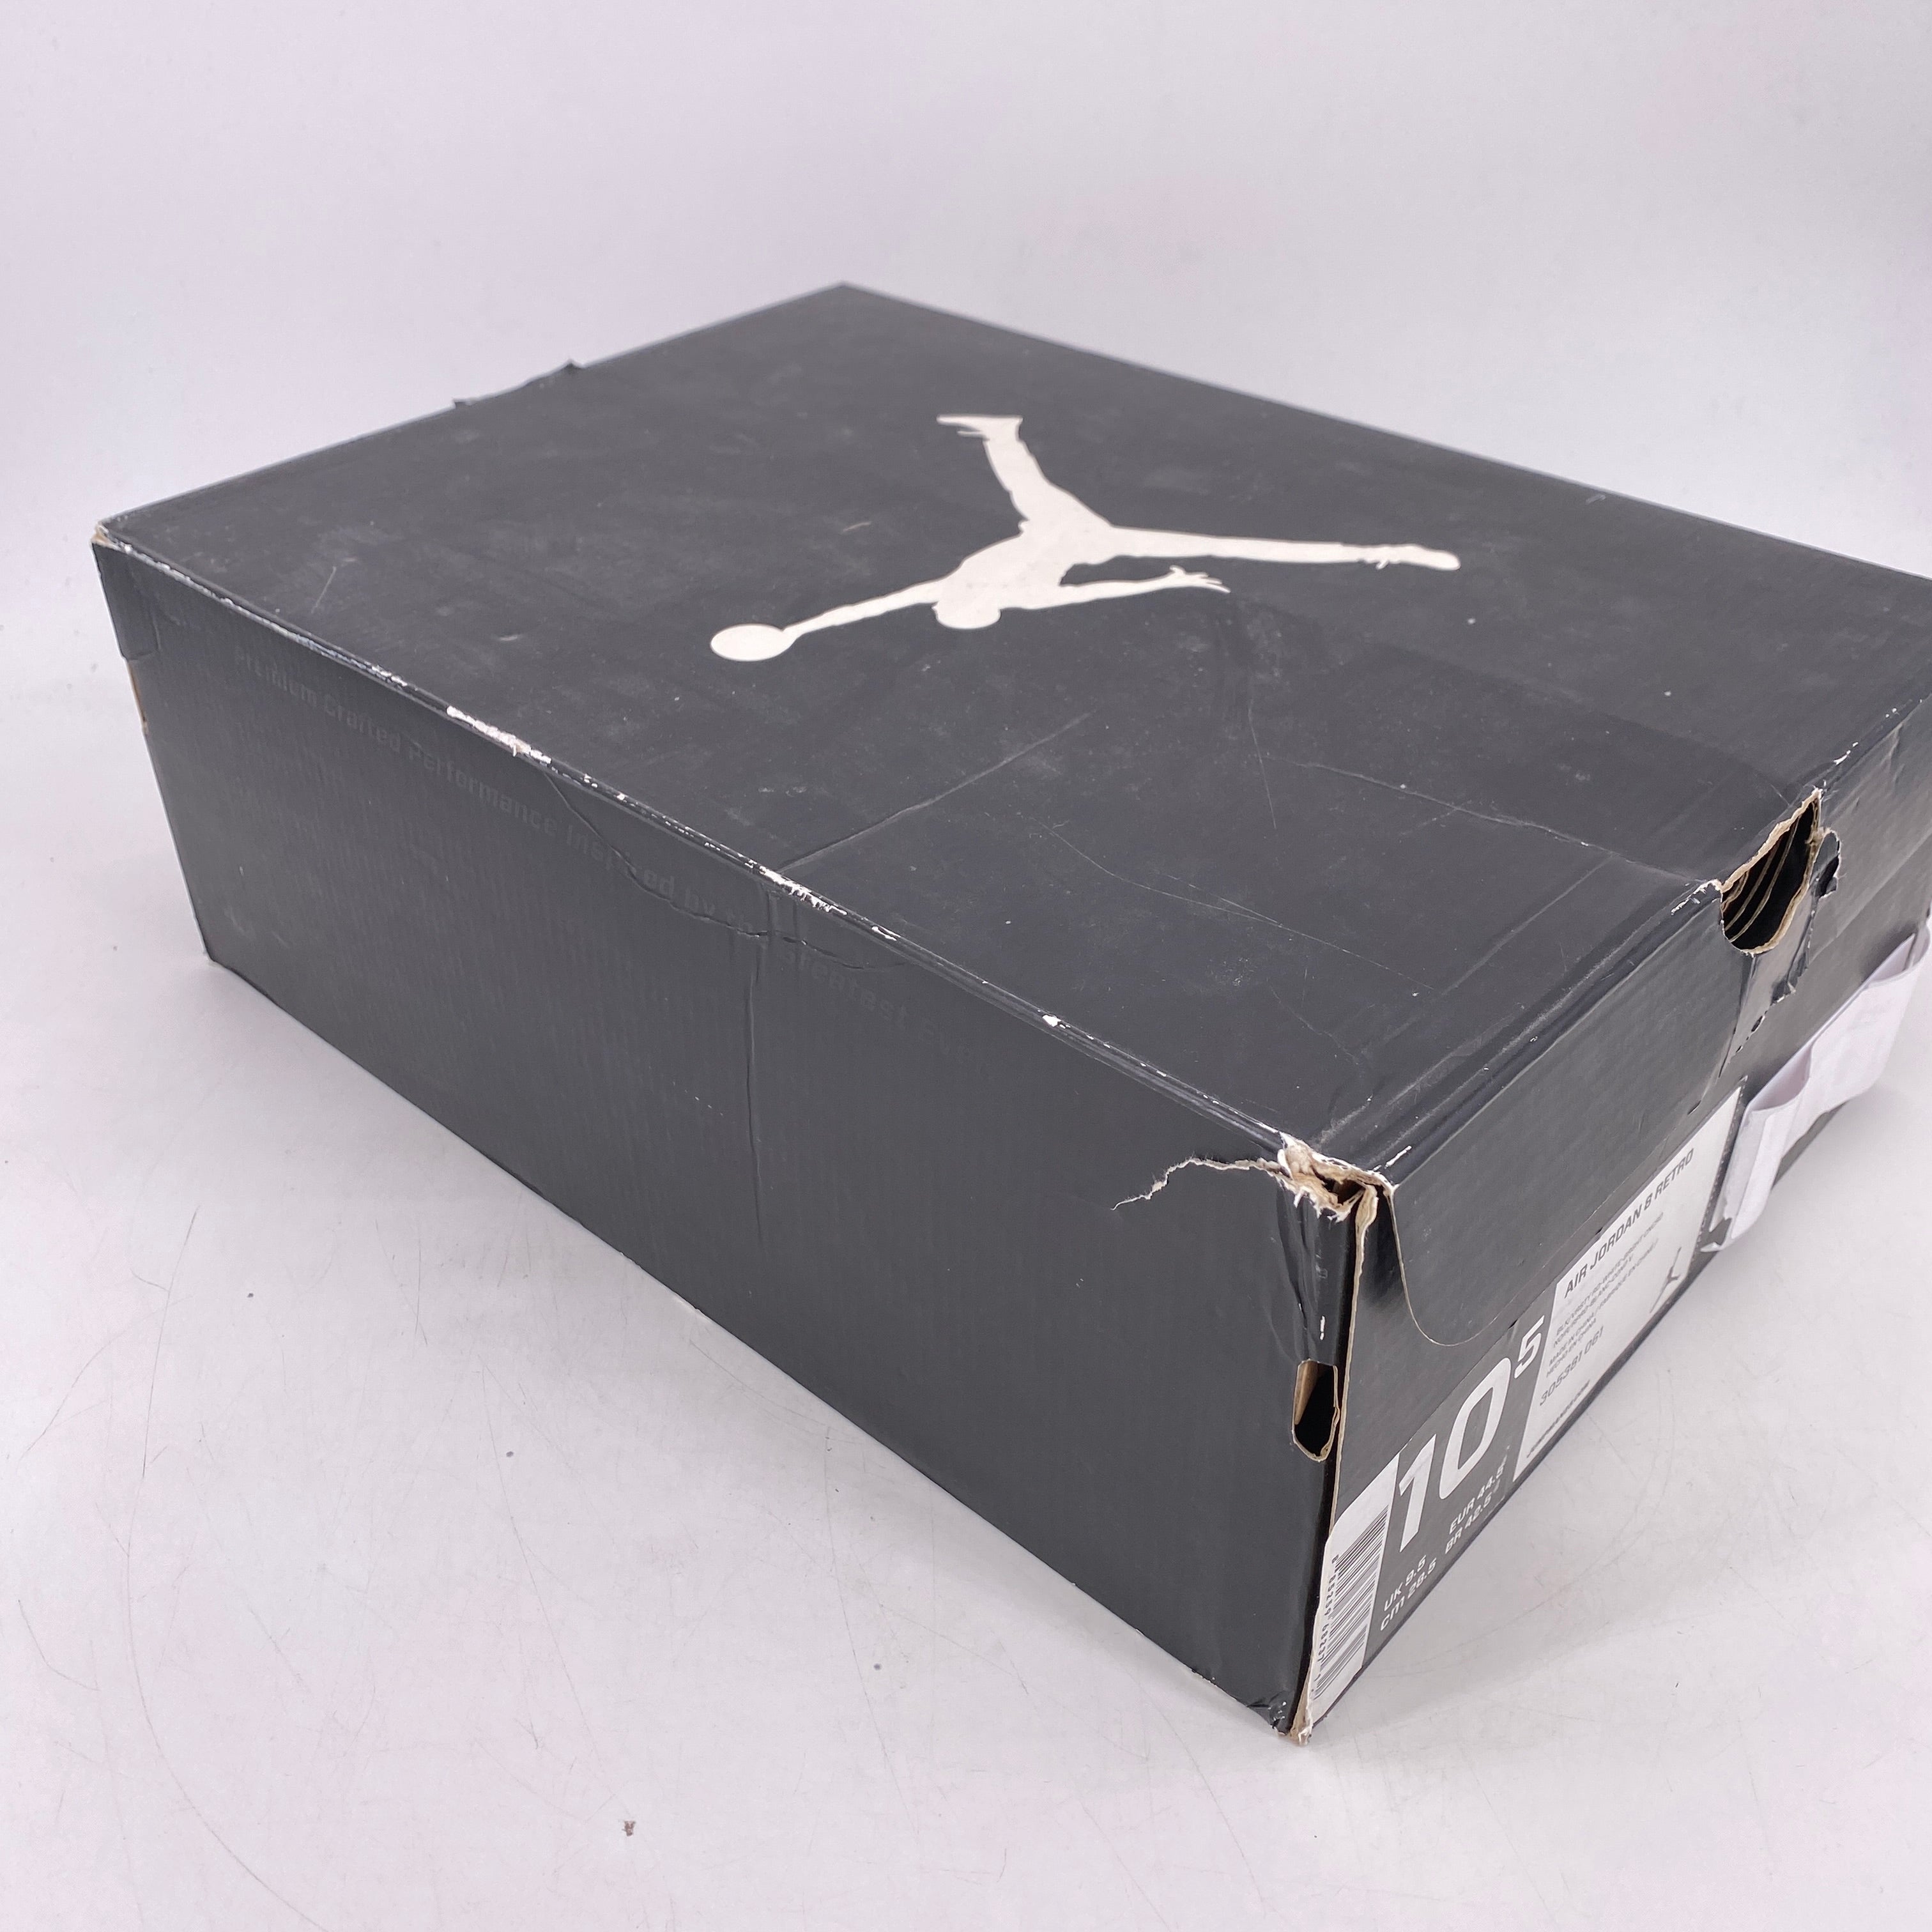 Air Jordan 8 Retro &quot;Playoff&quot; 2013 Used Size 10.5